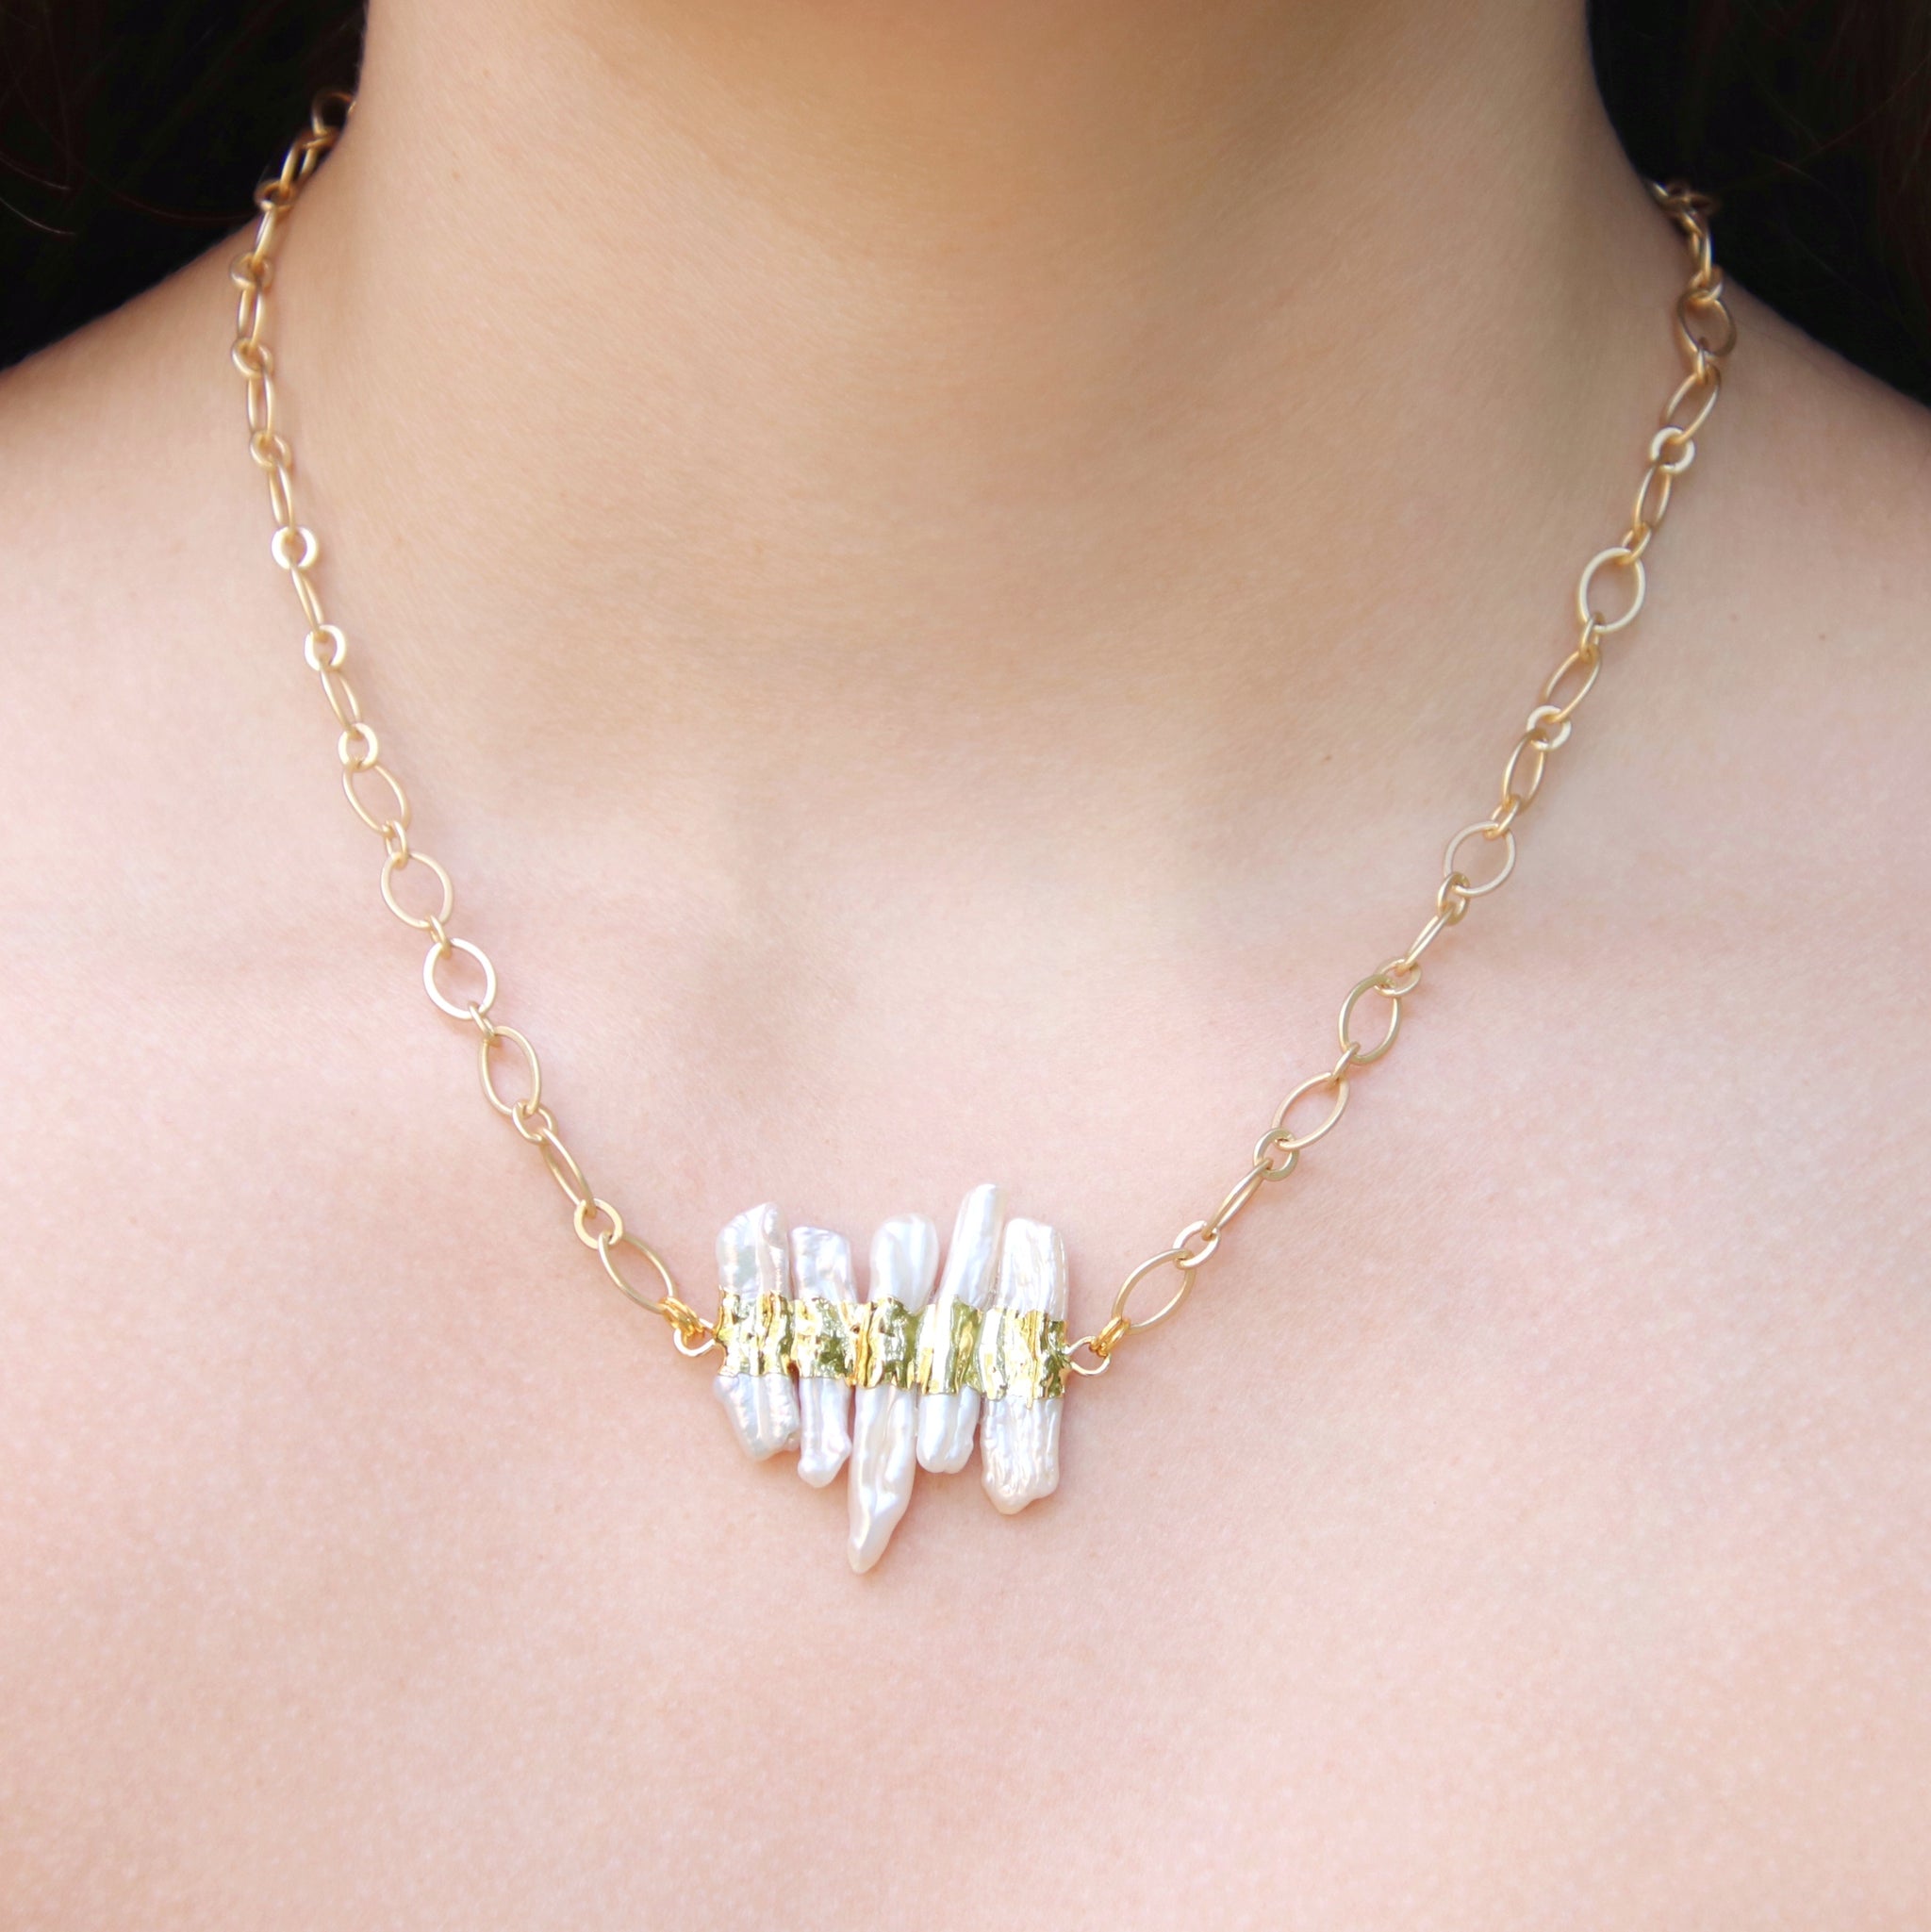 “Carroll” Necklace